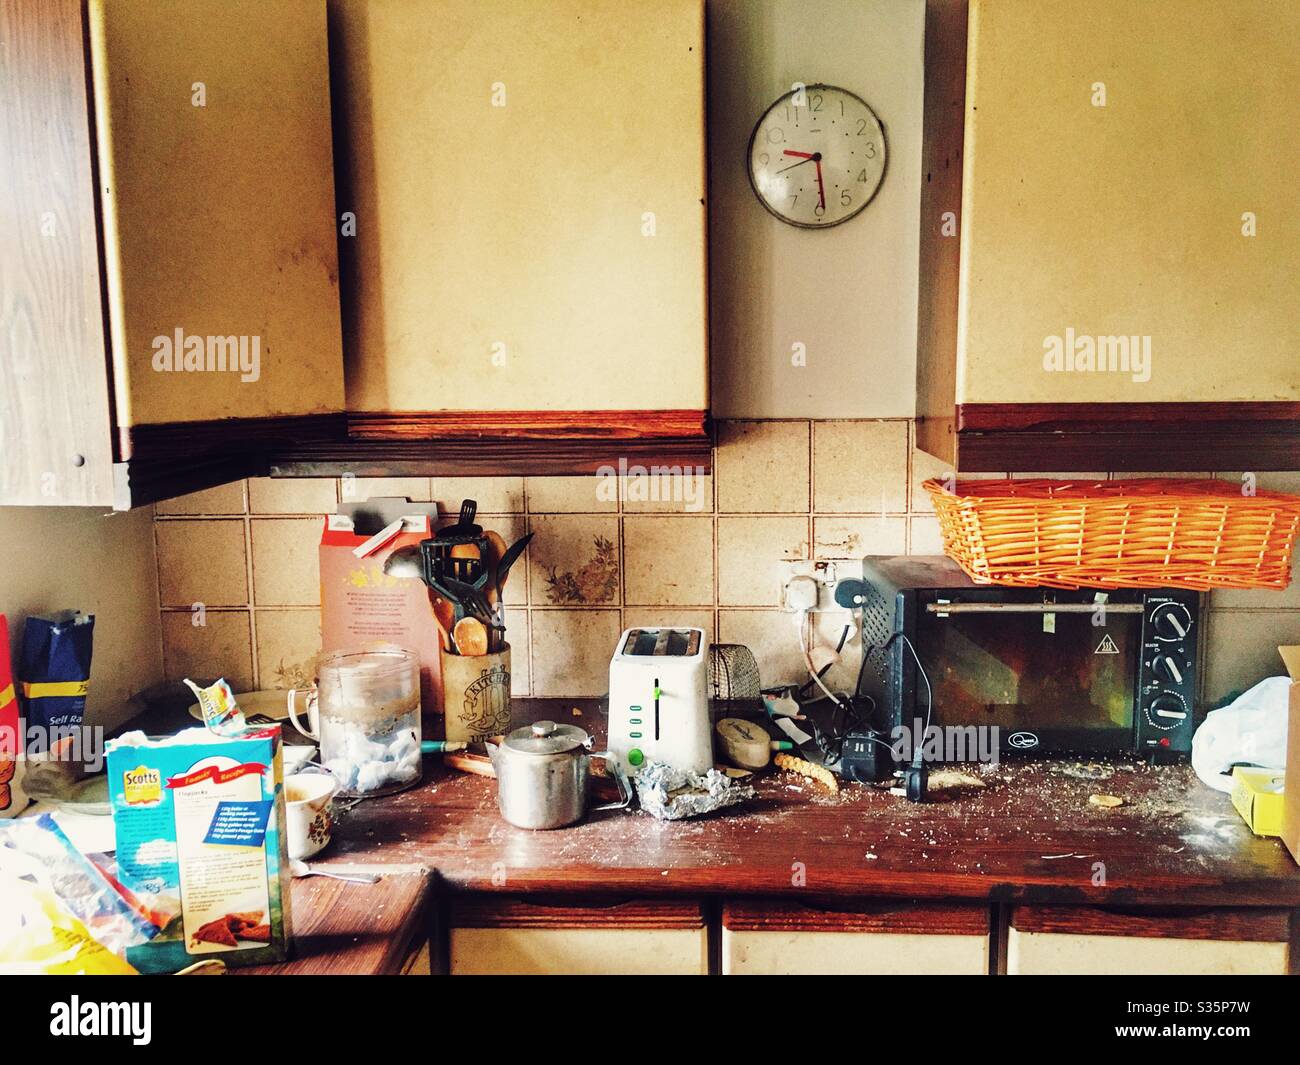 Dirty kitchen Stock Photo - Alamy